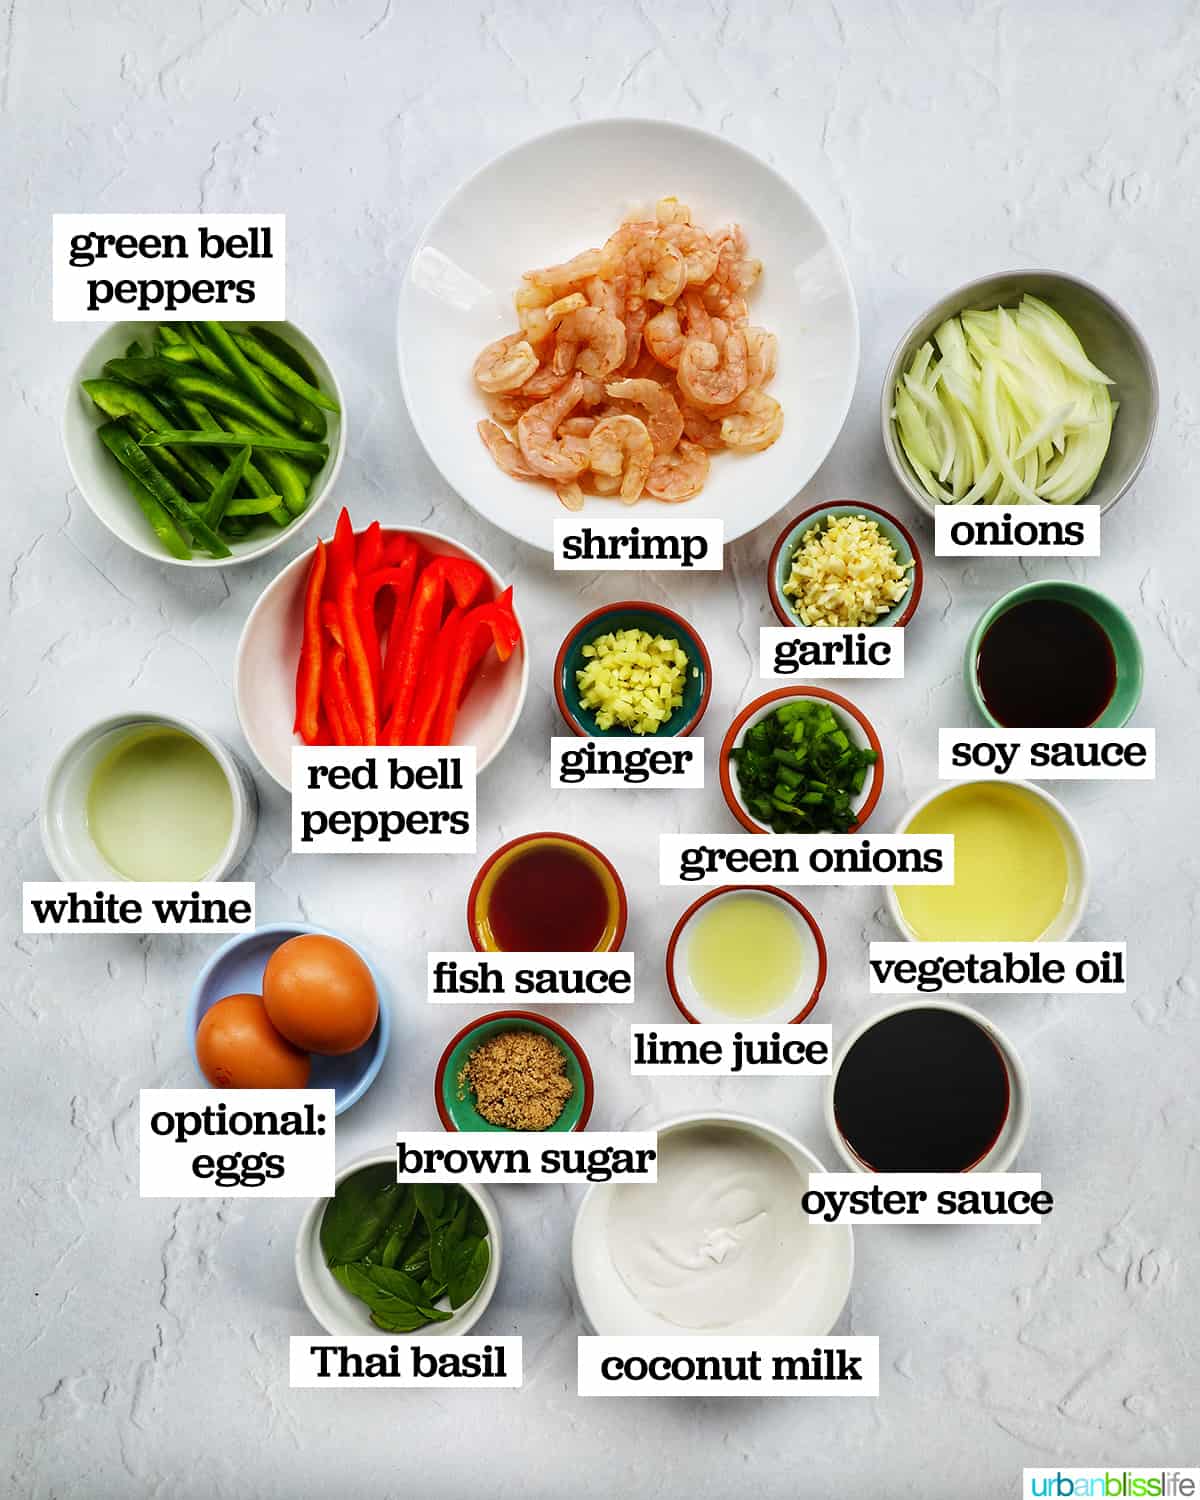 bowls of several ingredients to make Thai Basil Shrimp.